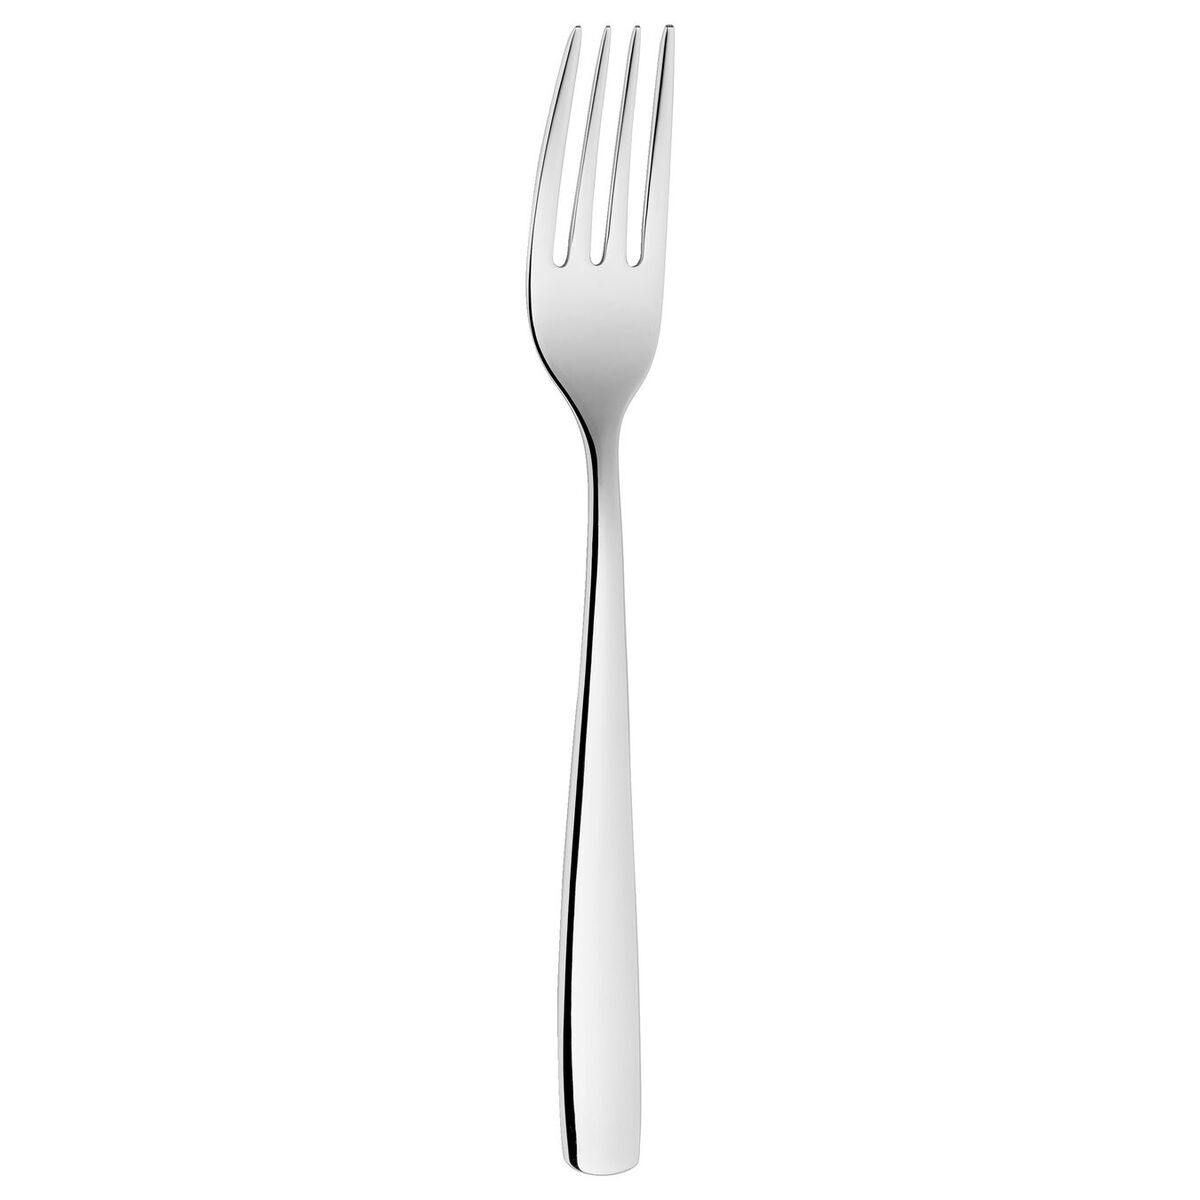 Cutlery set Ballarini 01203-360-0 Silver Stainless steel (60 Pieces)